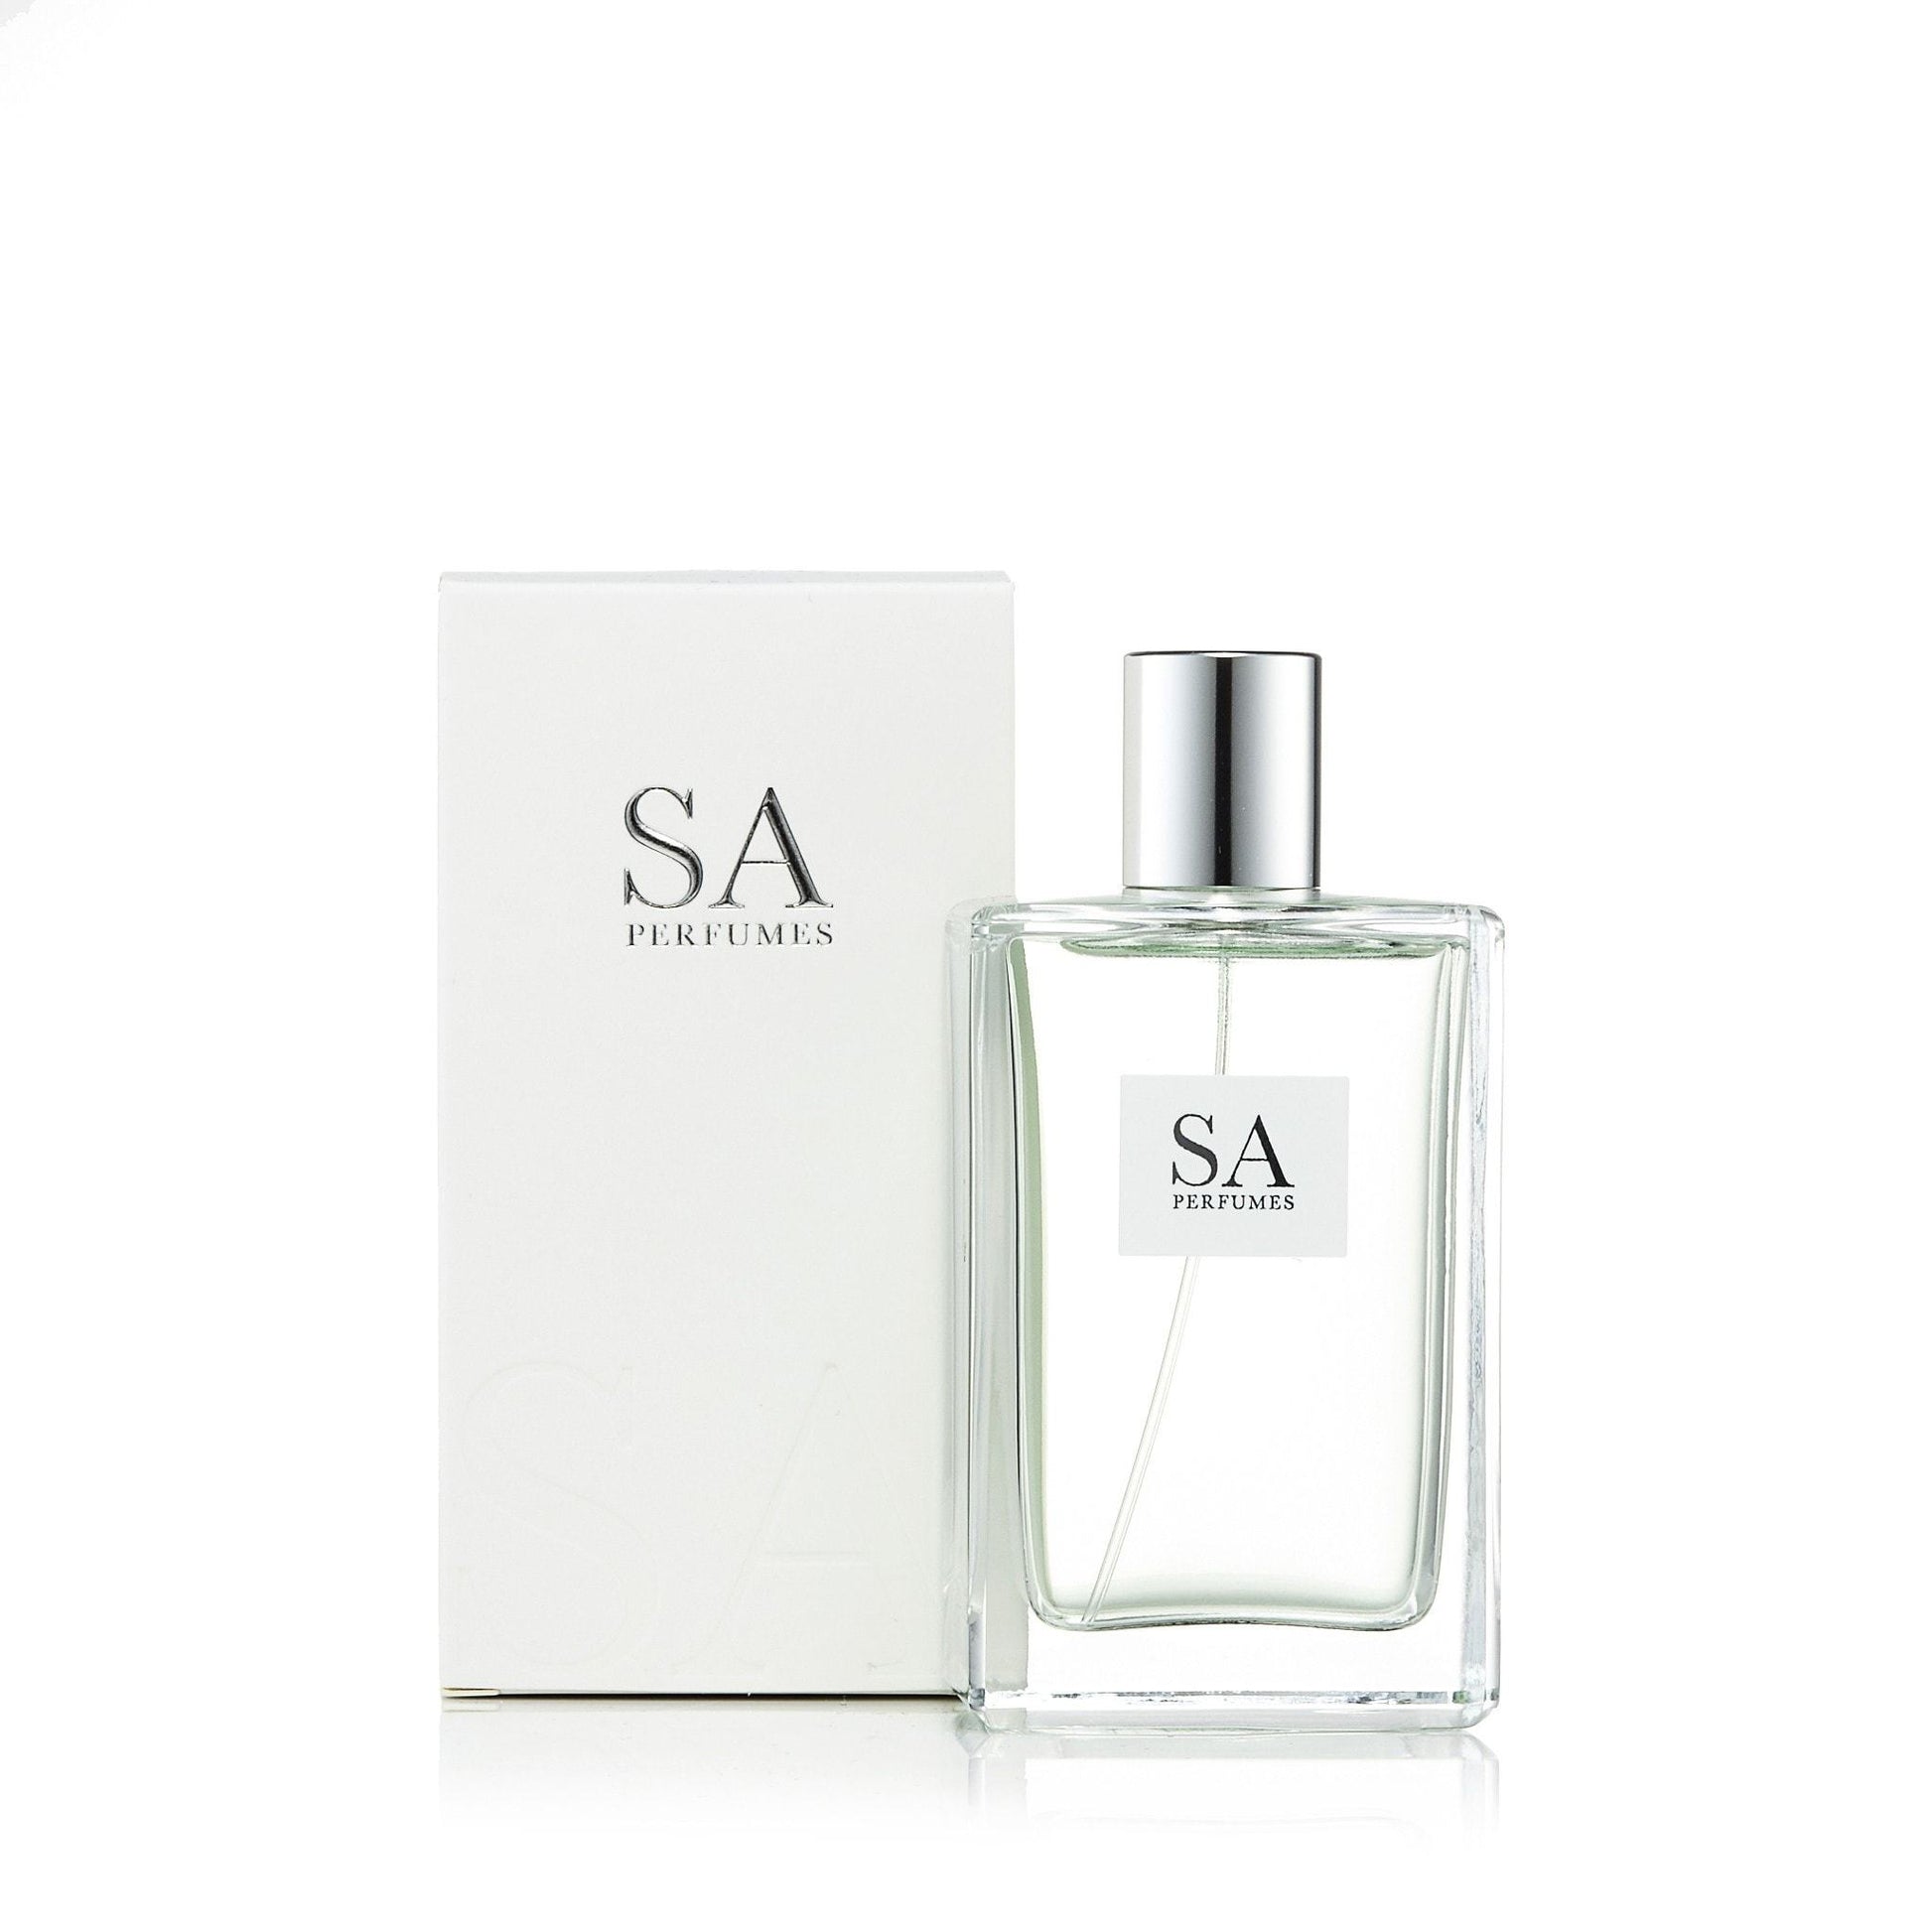 Sa Perfumes Eau de Parfum Spray for Men, Product image 2